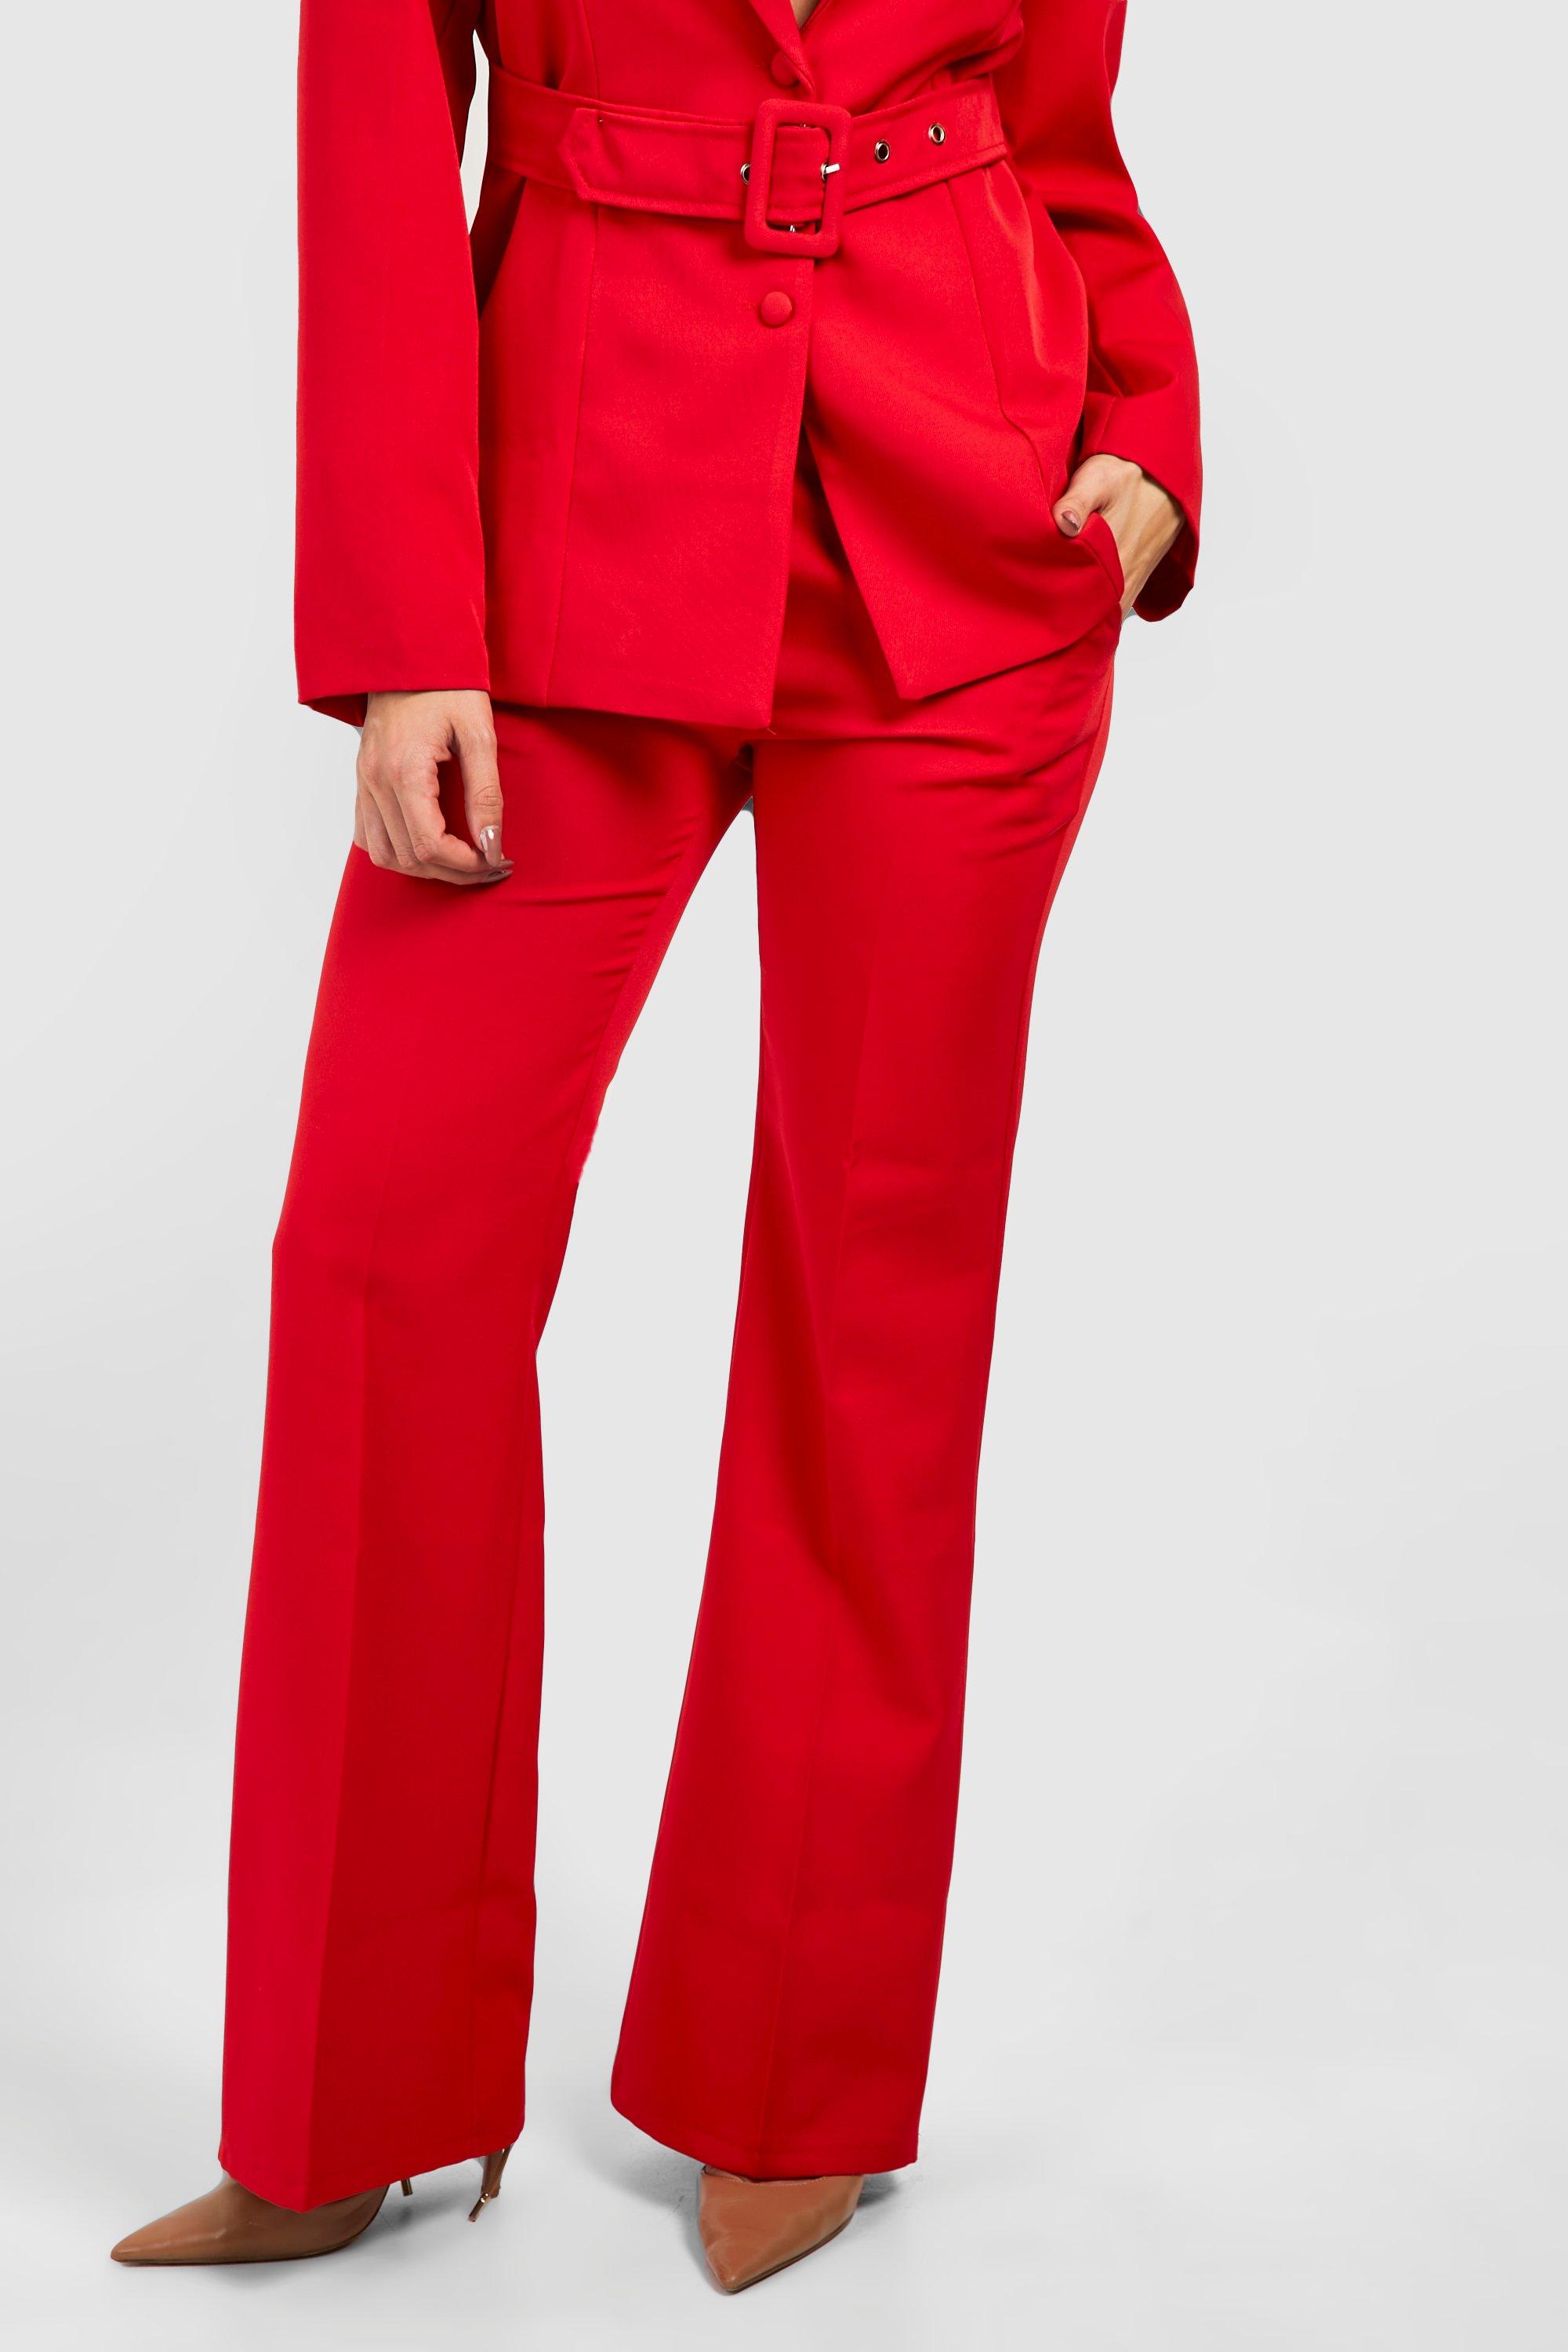 https://media.boohoo.com/i/boohoo/gzz77824_red_xl_3/female-red-fit-&-flare-dress-pants